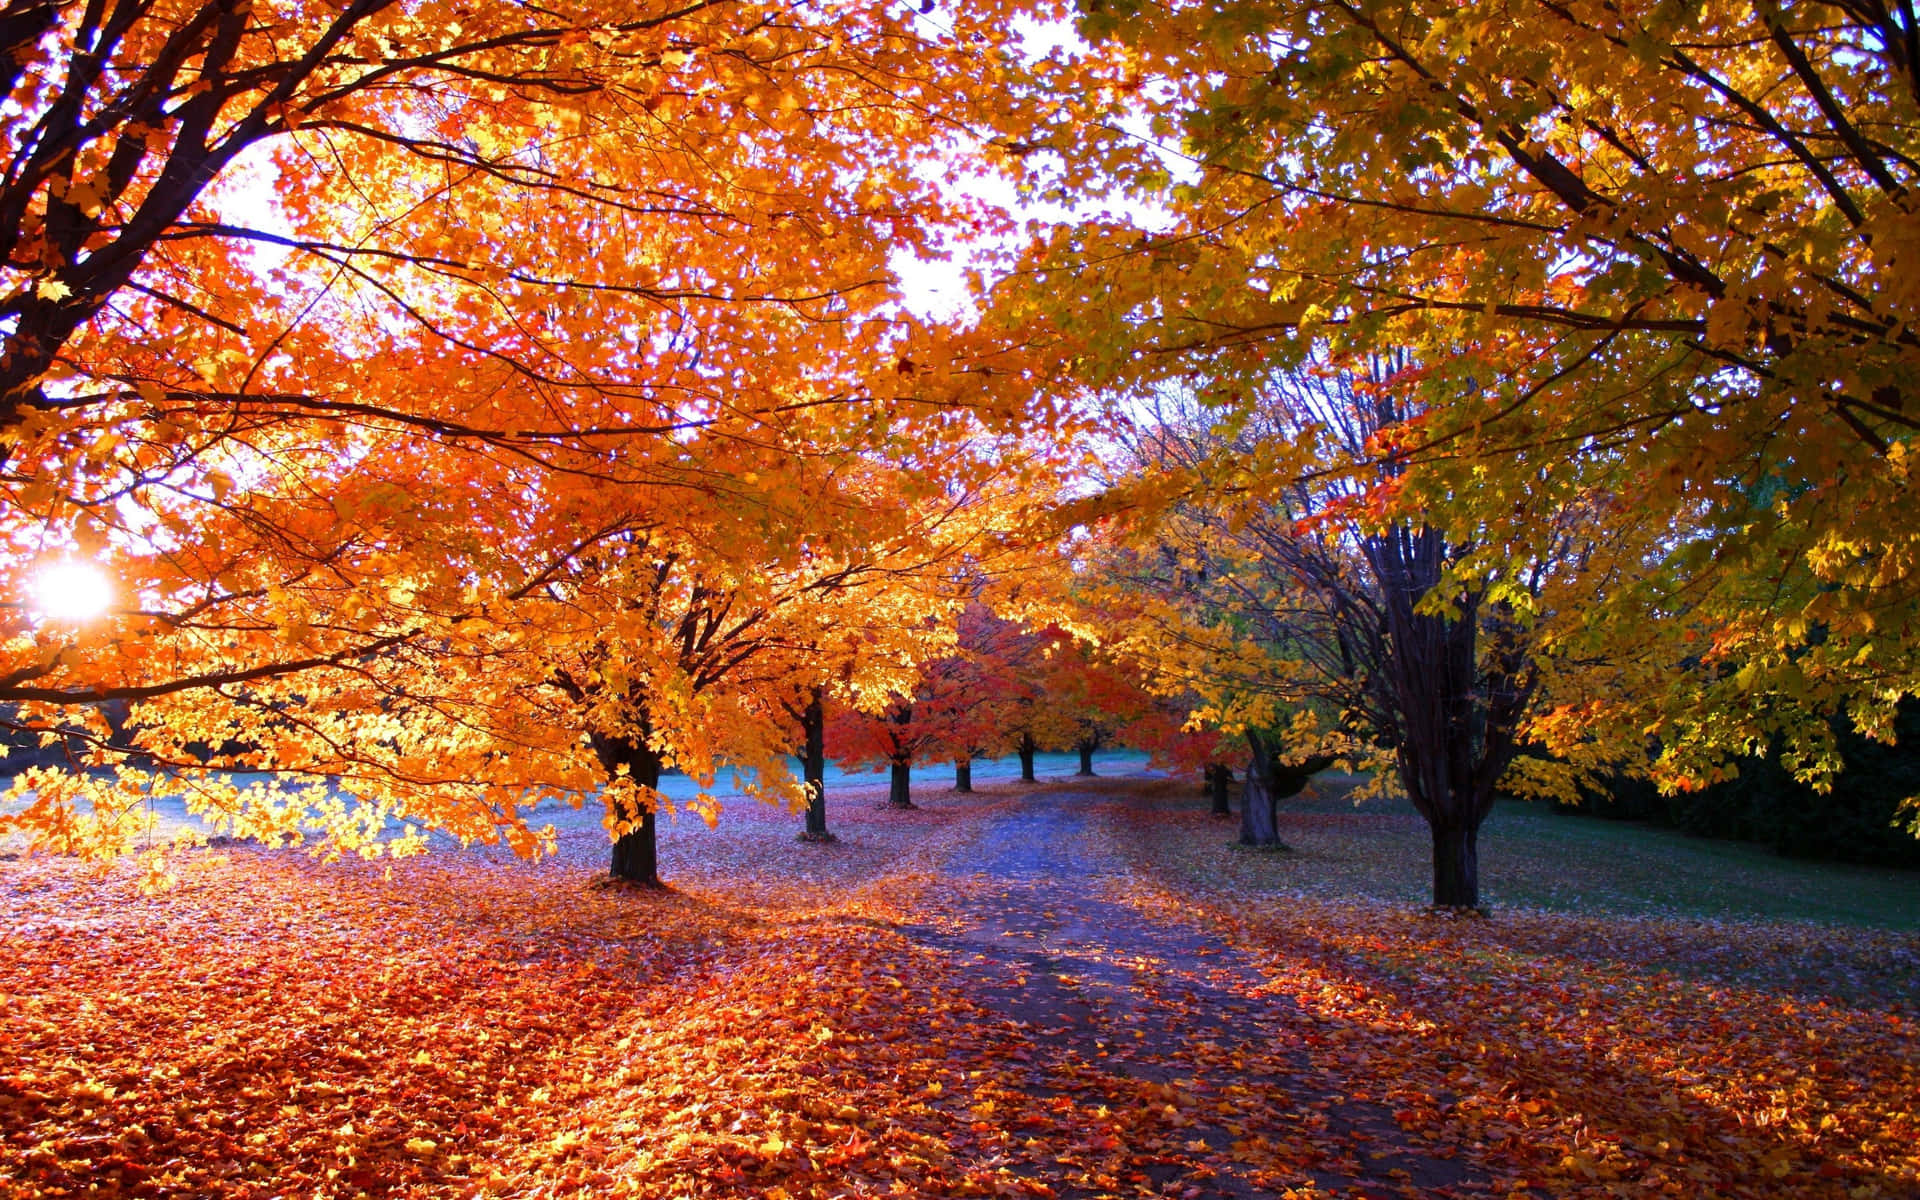 An idyllic autumn forest